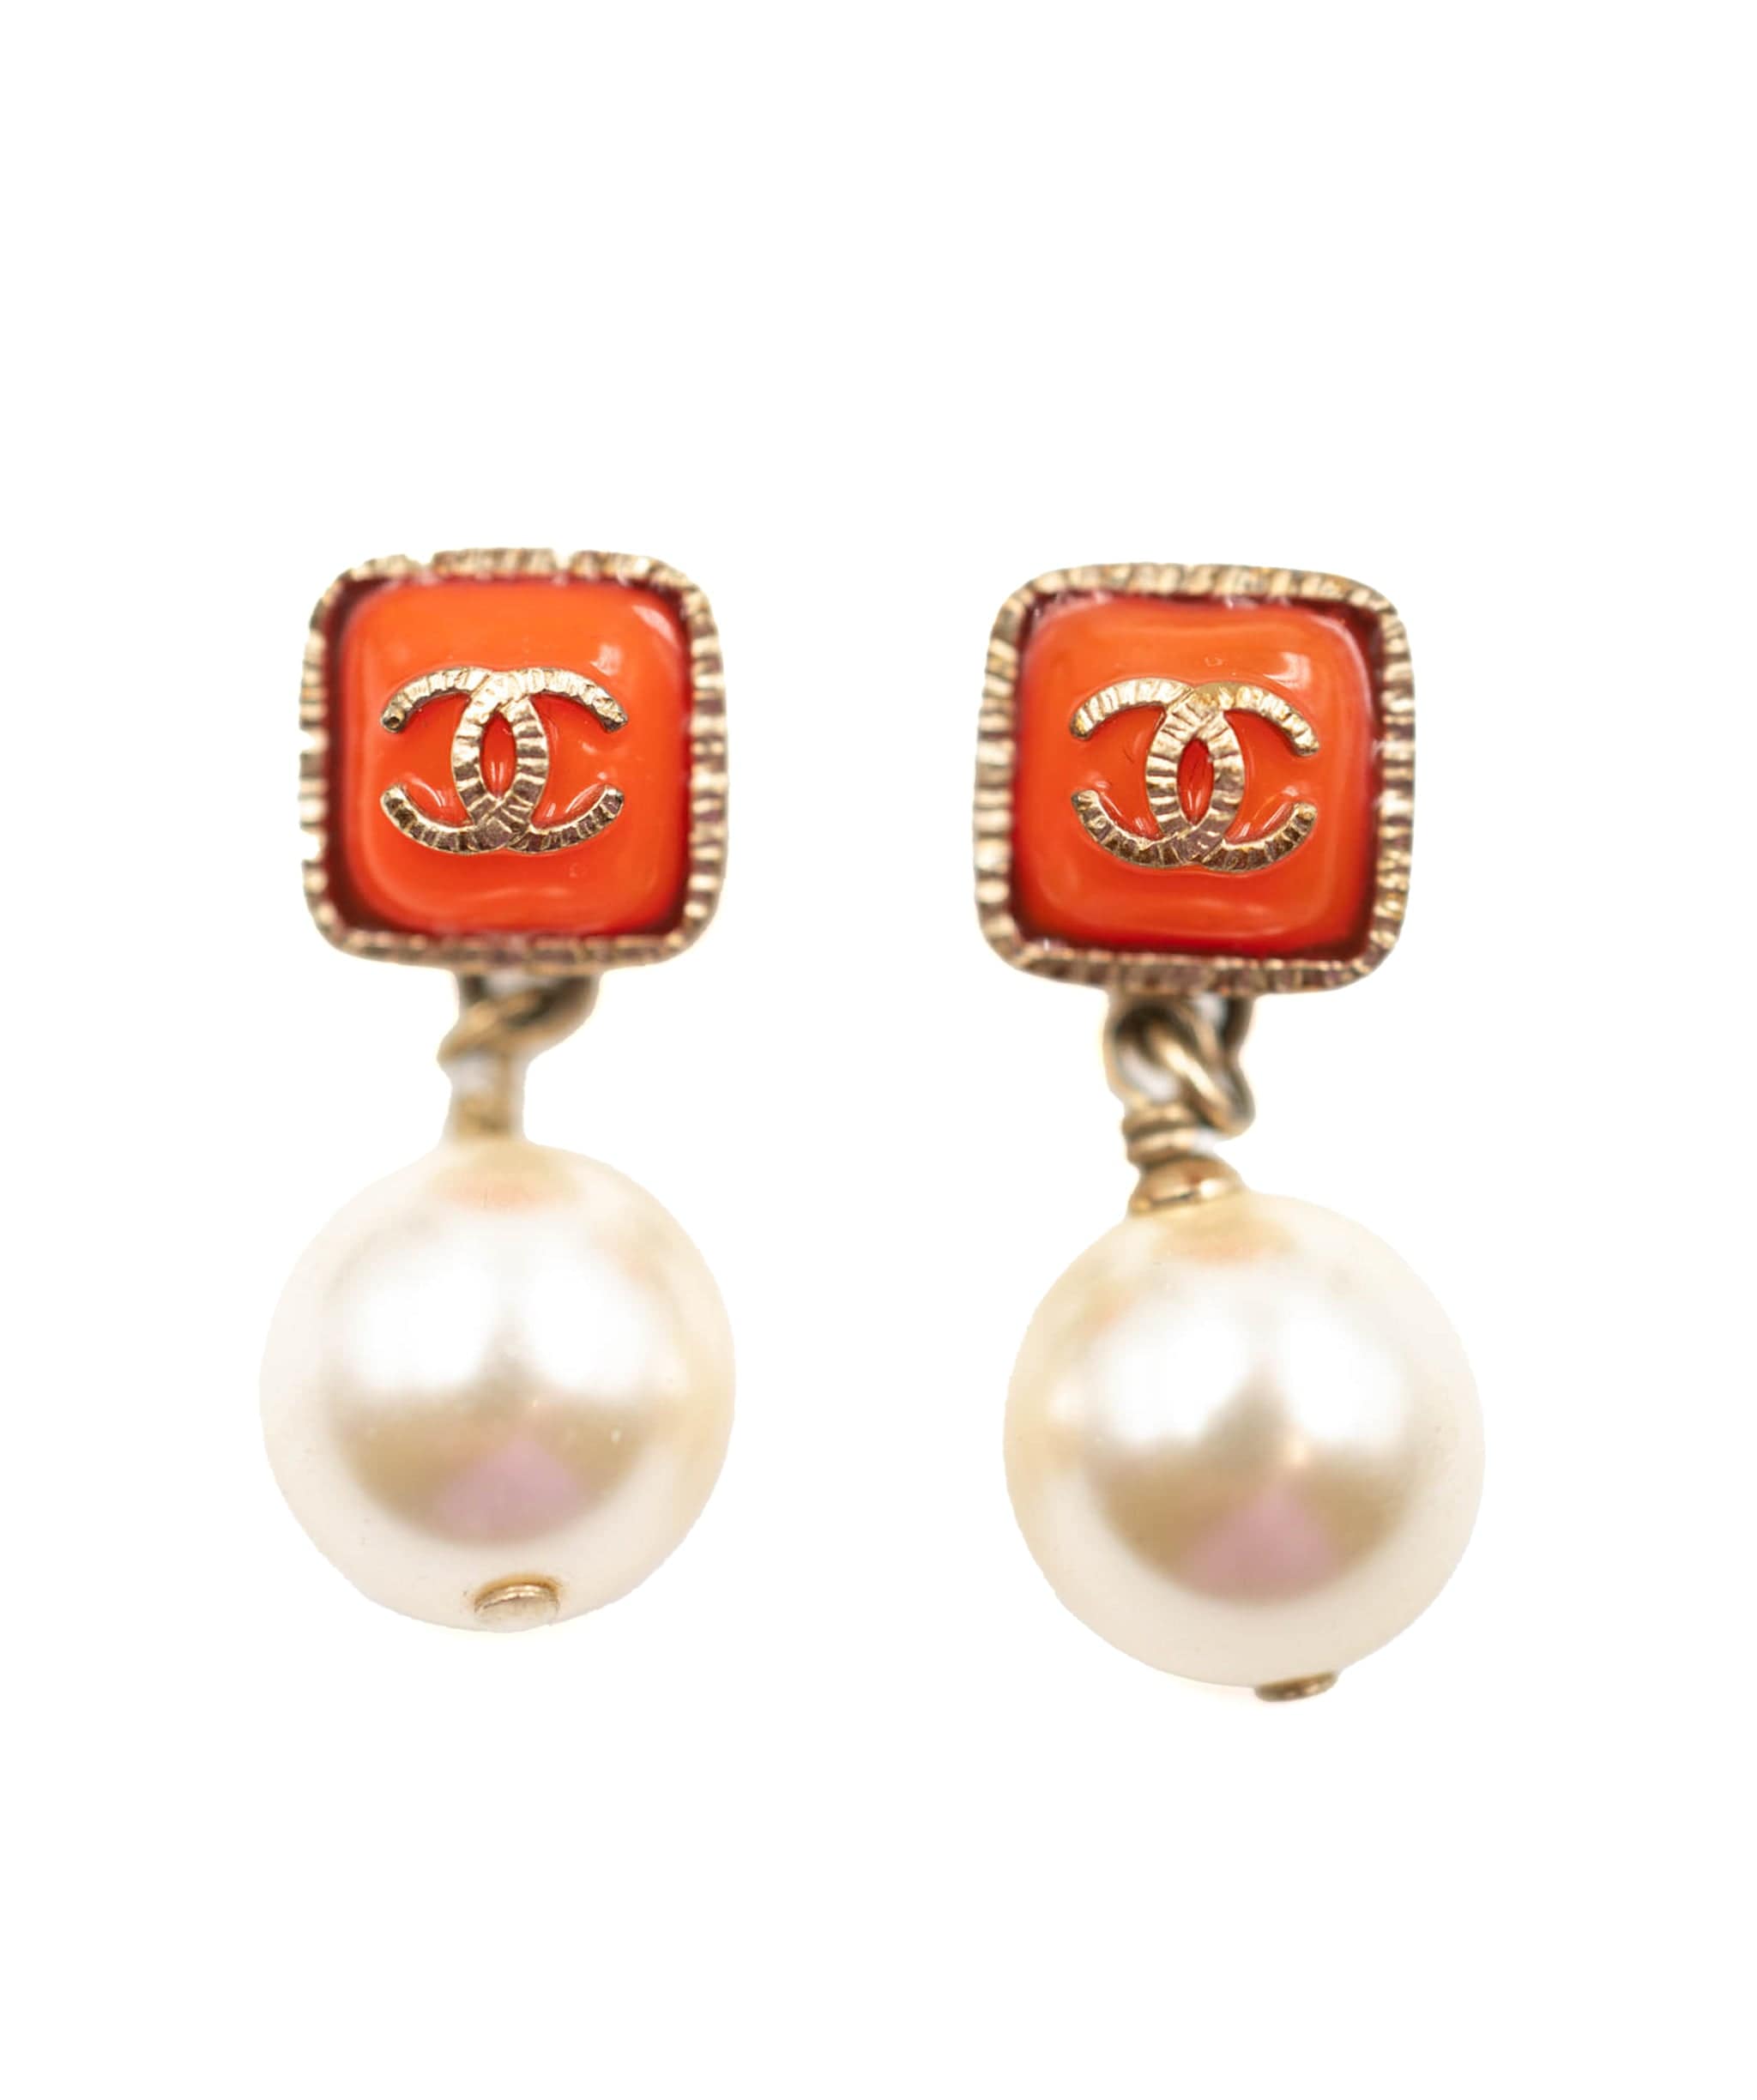 Chanel Chanel White and Orange Earrings RJL1538